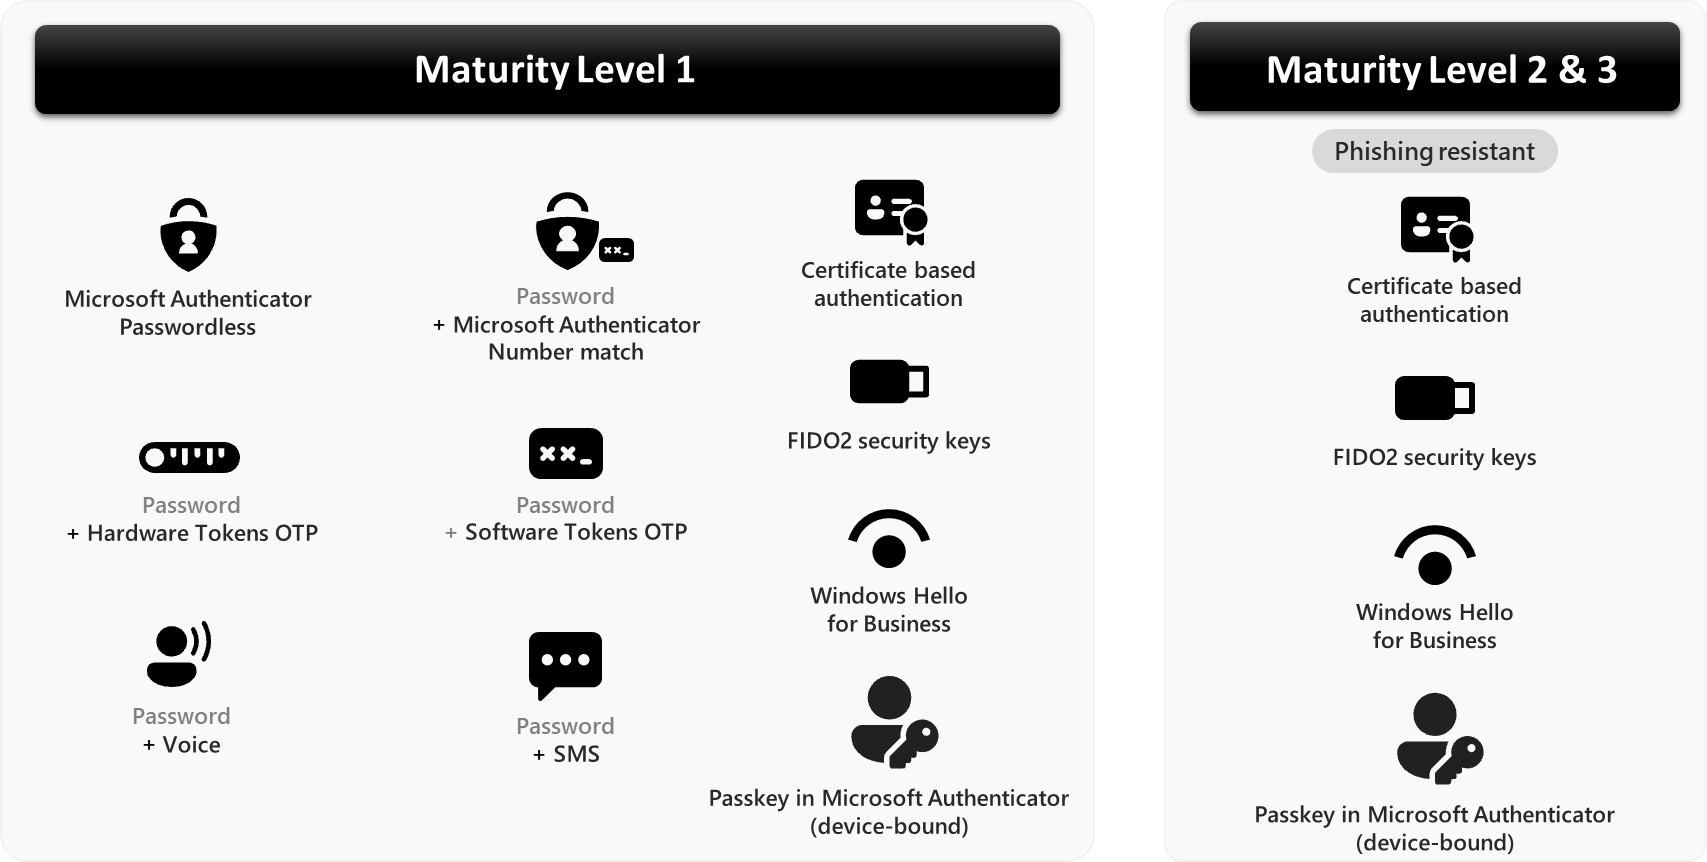 Comparison of authentication methods at each maturity level.